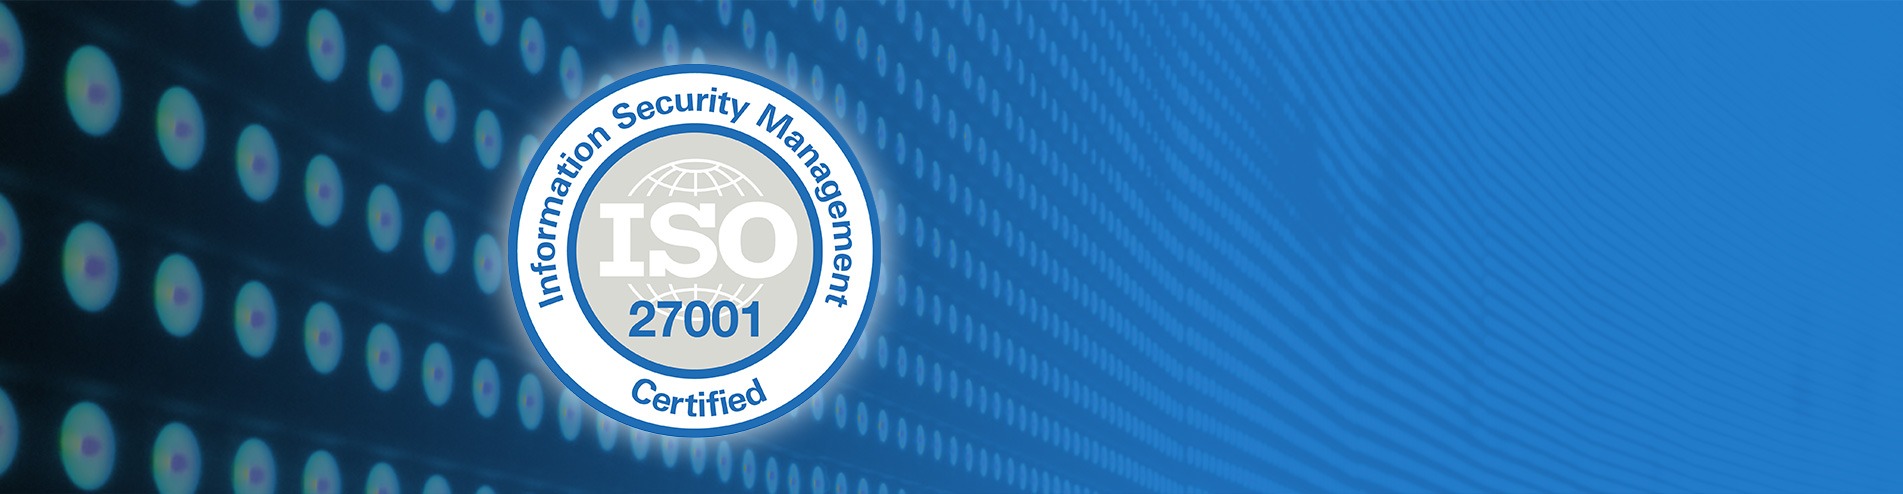 WATI Receives ISO 27001:2013 Certification